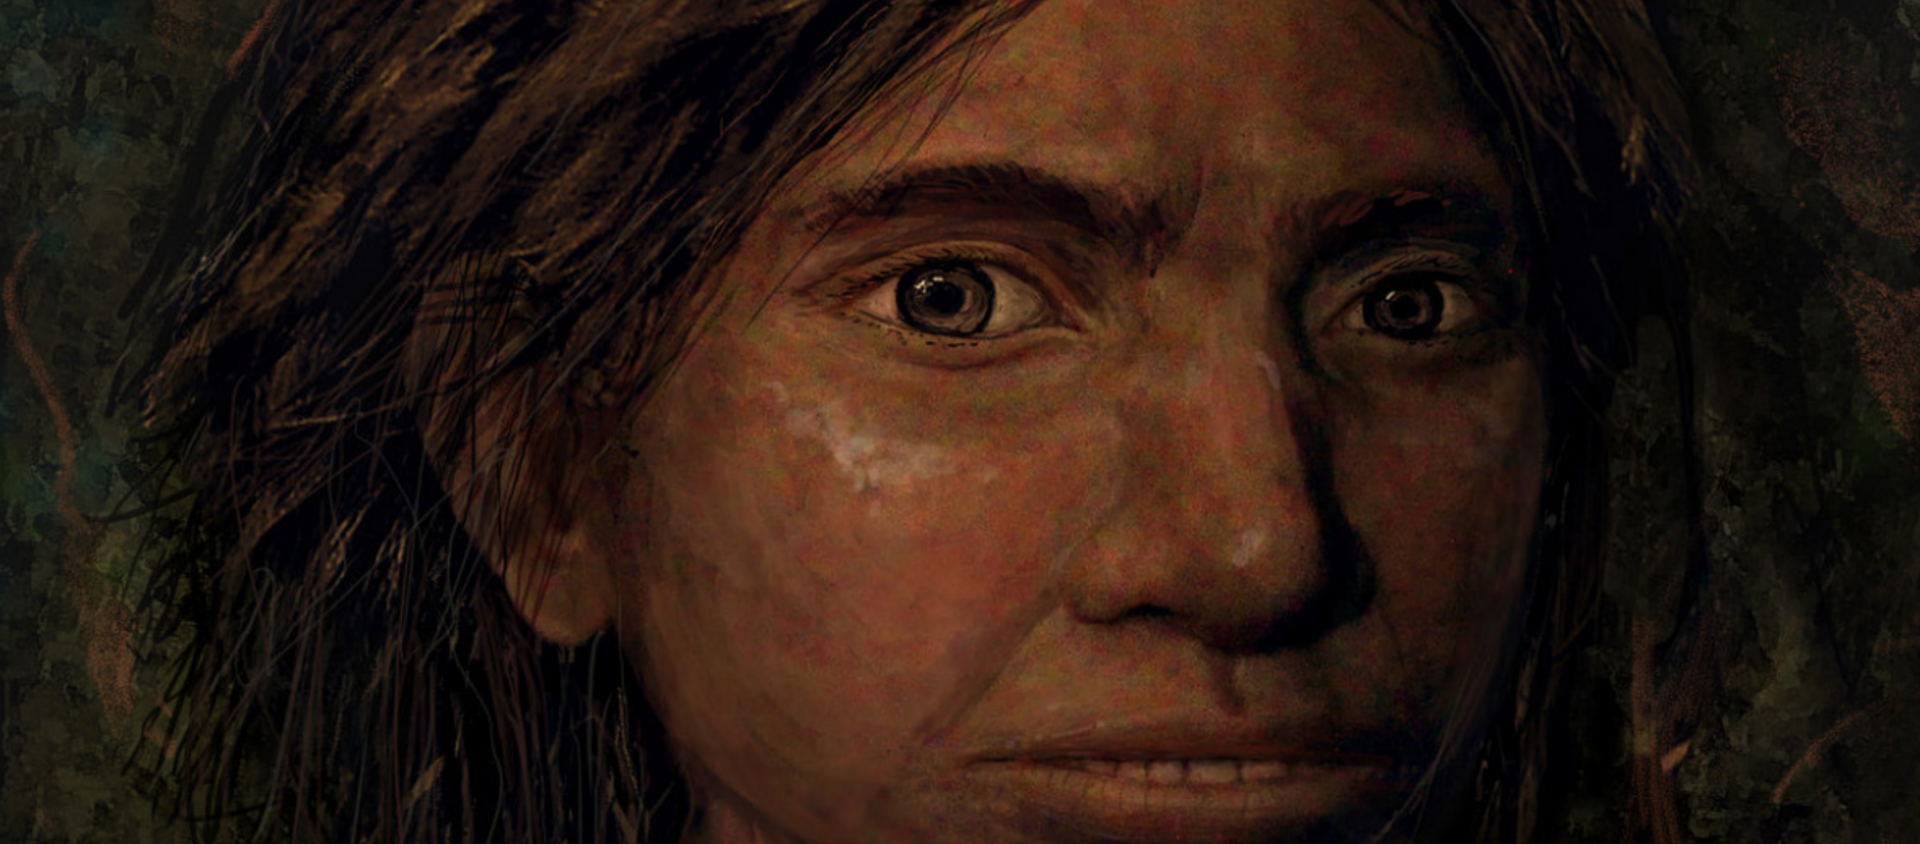 Researchers Reconstruct Face of Extinct Denisovan Human Relative - Sputnik International, 1920, 20.09.2019